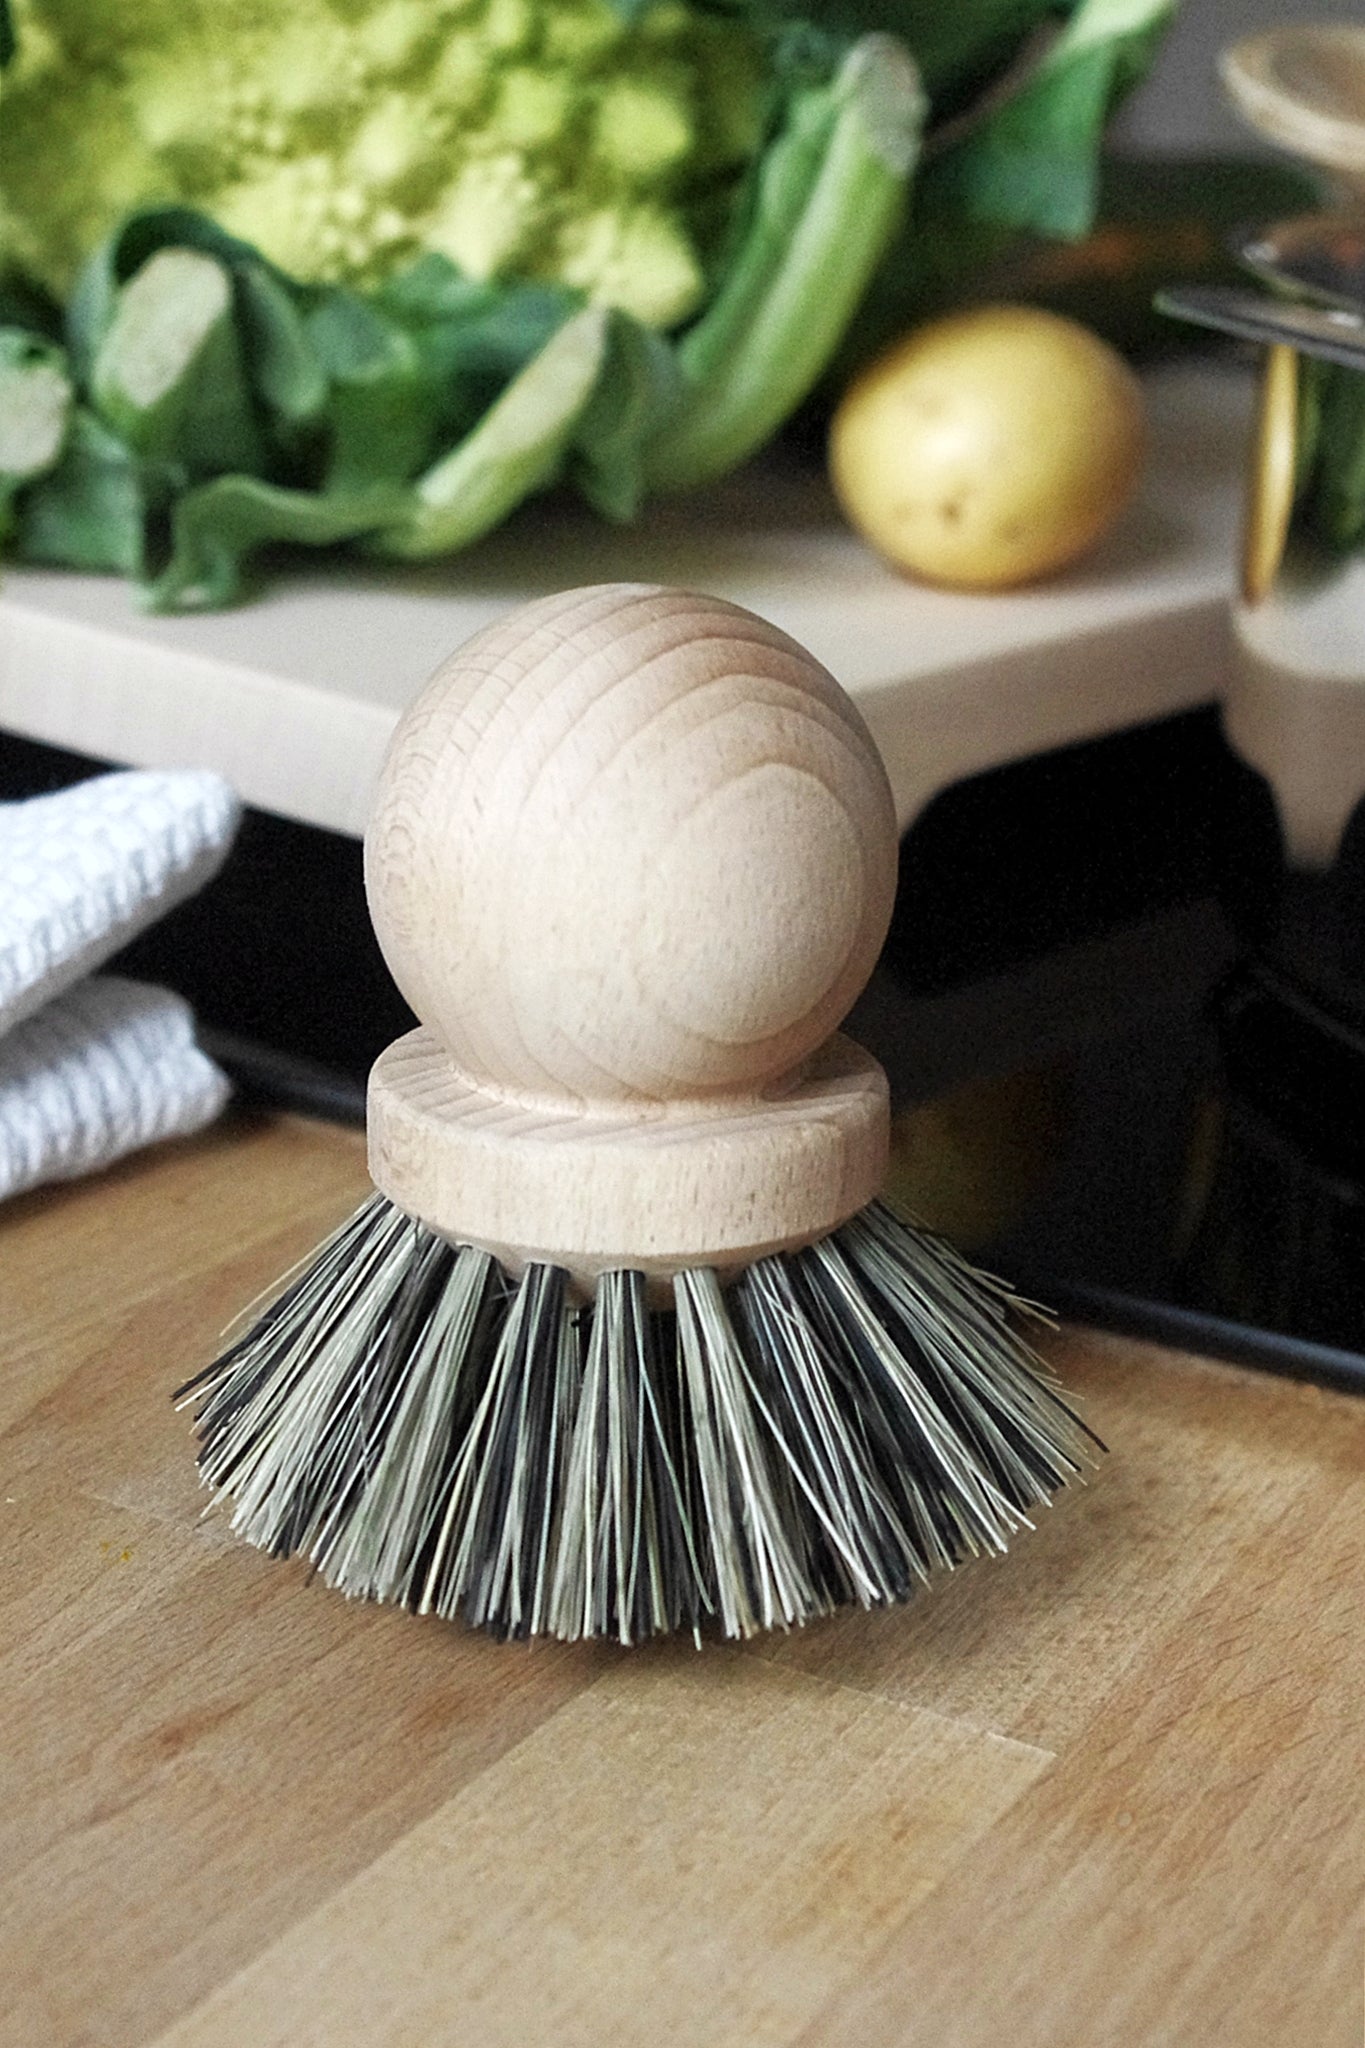 Andrée Jardin Tradition Handled Dish Brush Replacement – Hampton